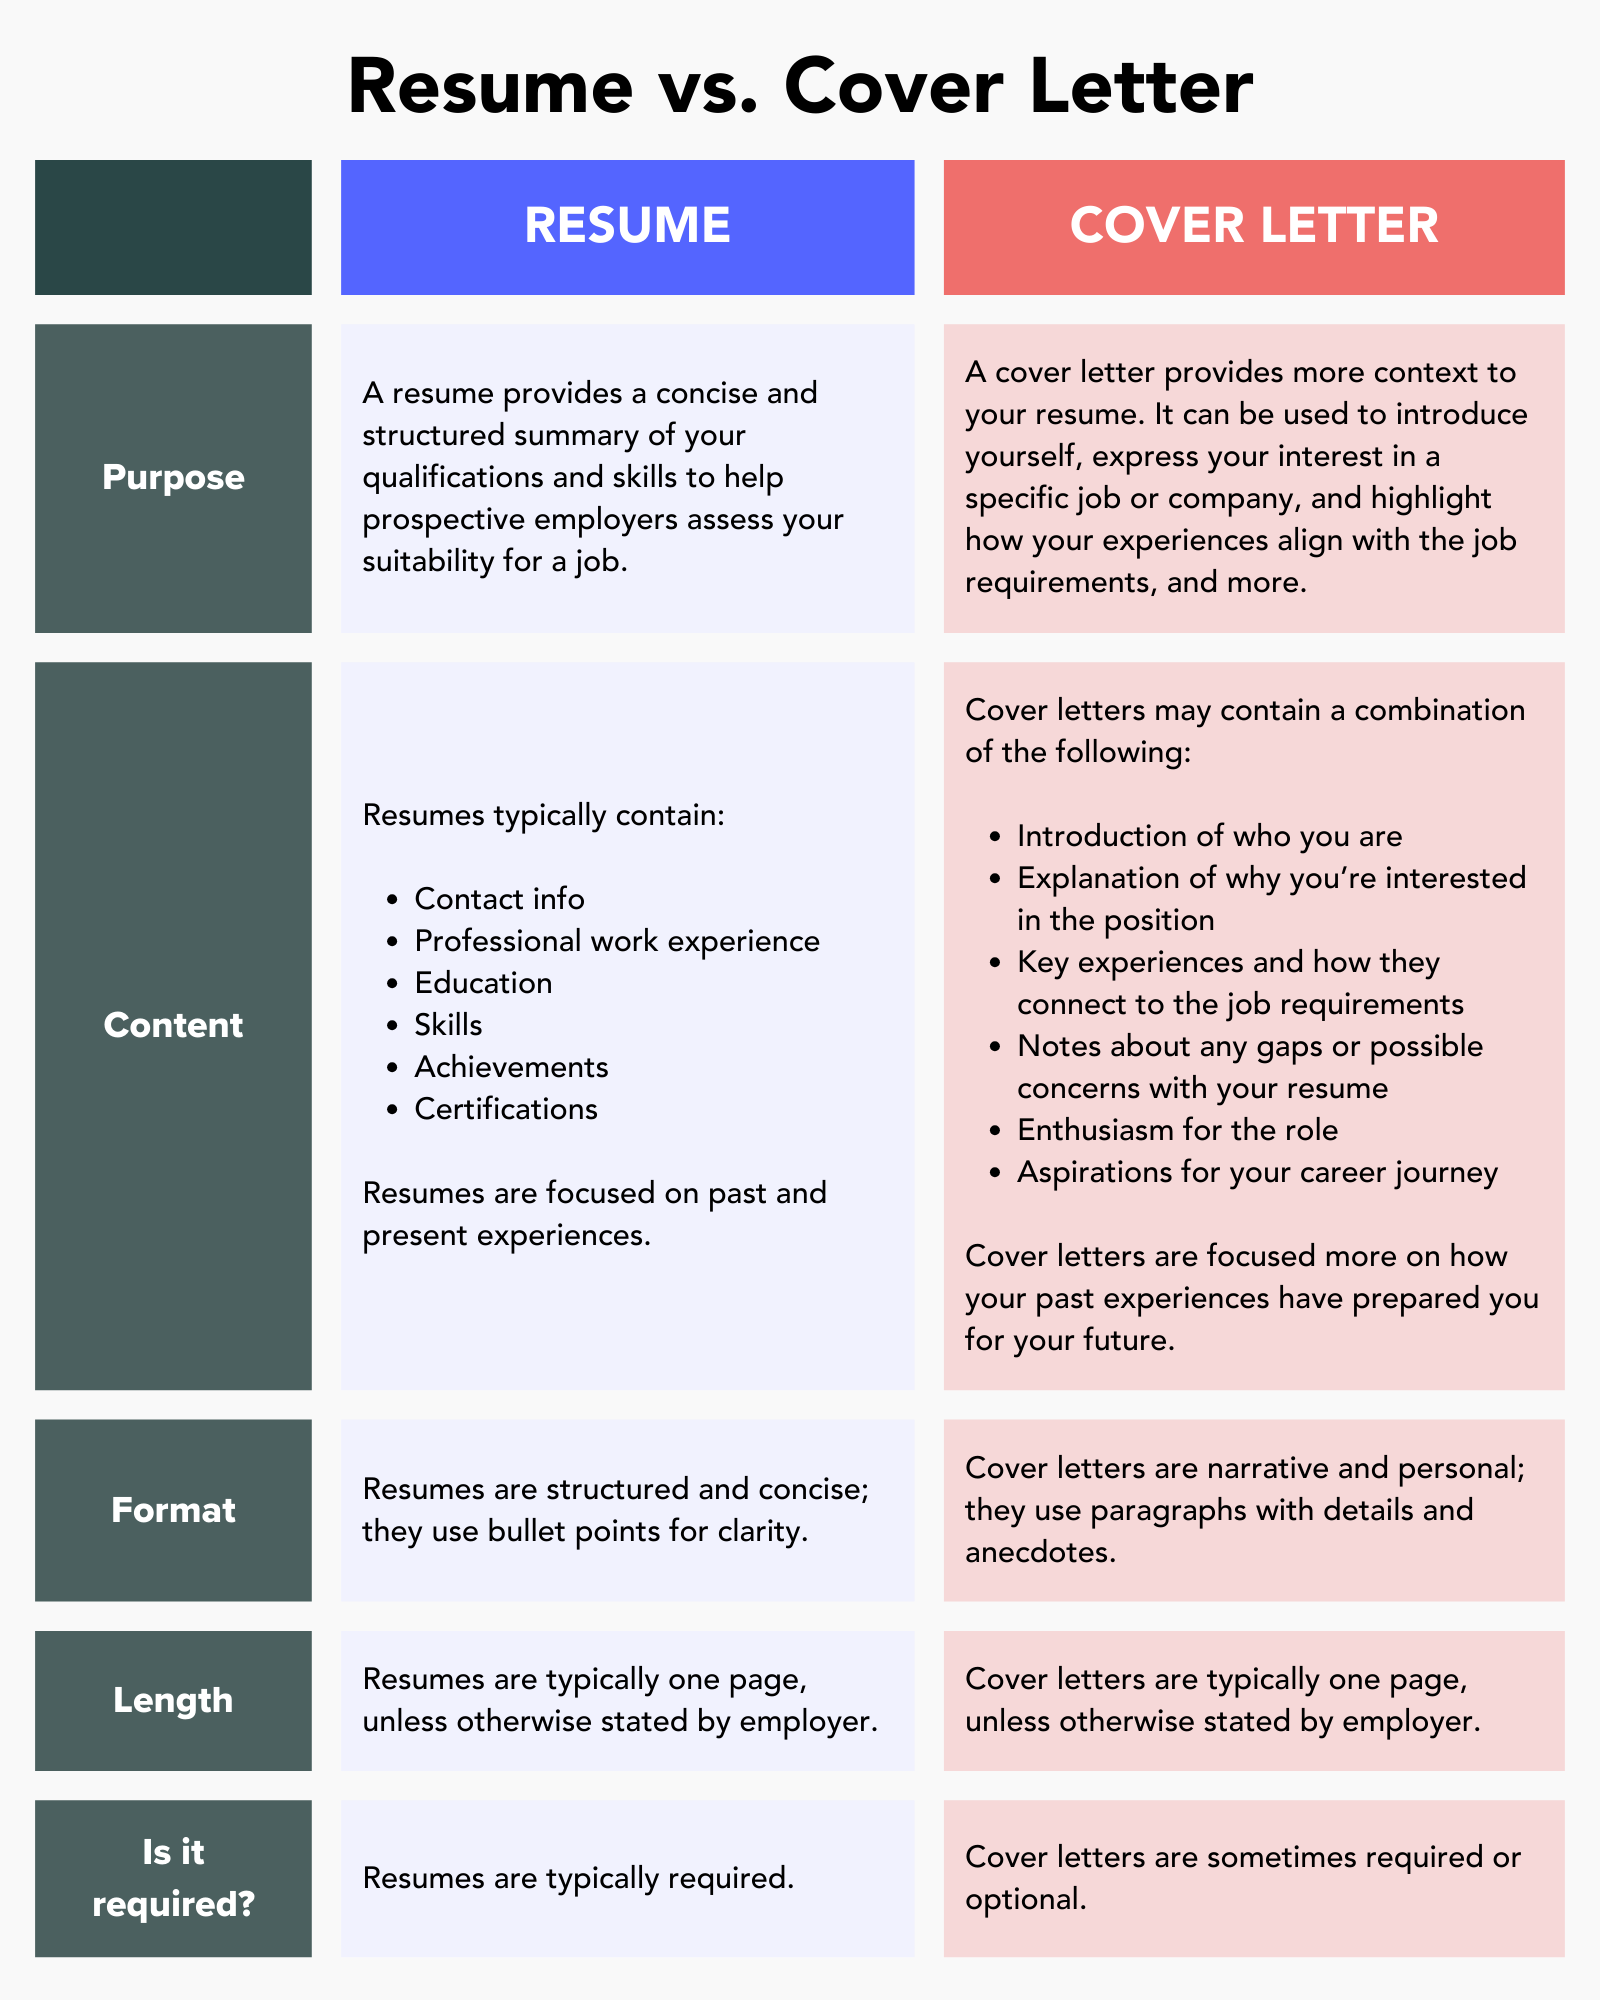 Resume vs Cover Letter: Comparison Chart